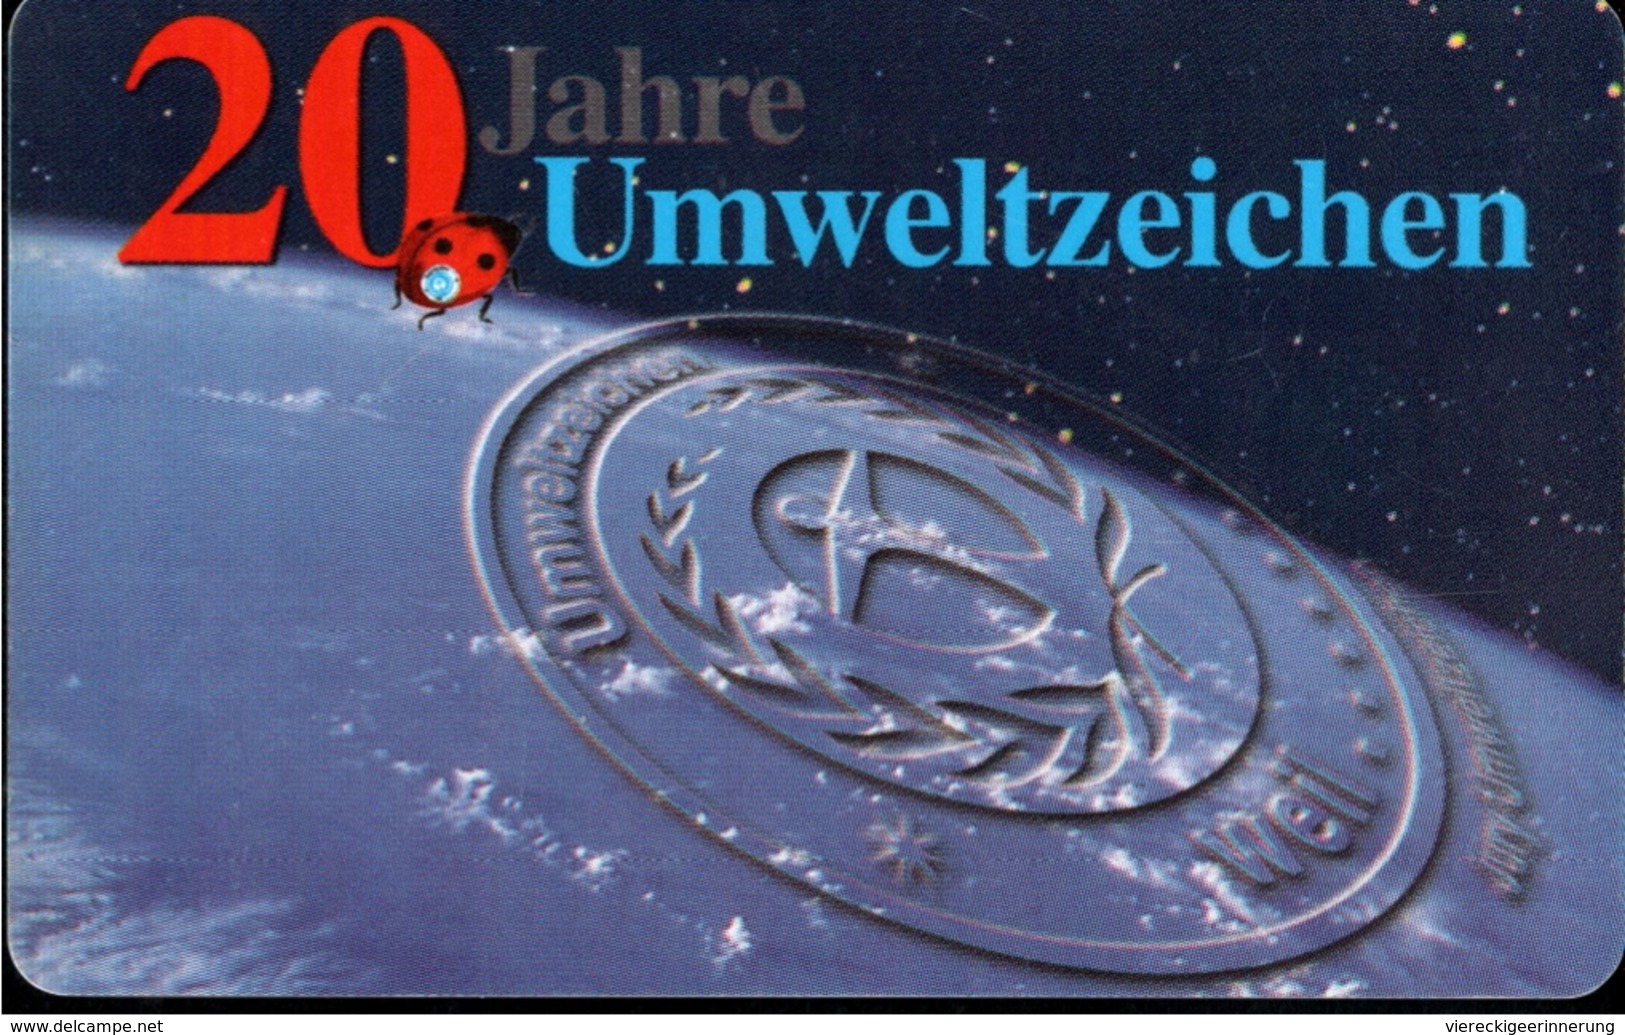 ! Telefonkarte, Telecarte, Phonecard, 1998, PD8, Umweltzeichen Blauer Engel, Germany - P & PD-Series: Schalterkarten Der Dt. Telekom